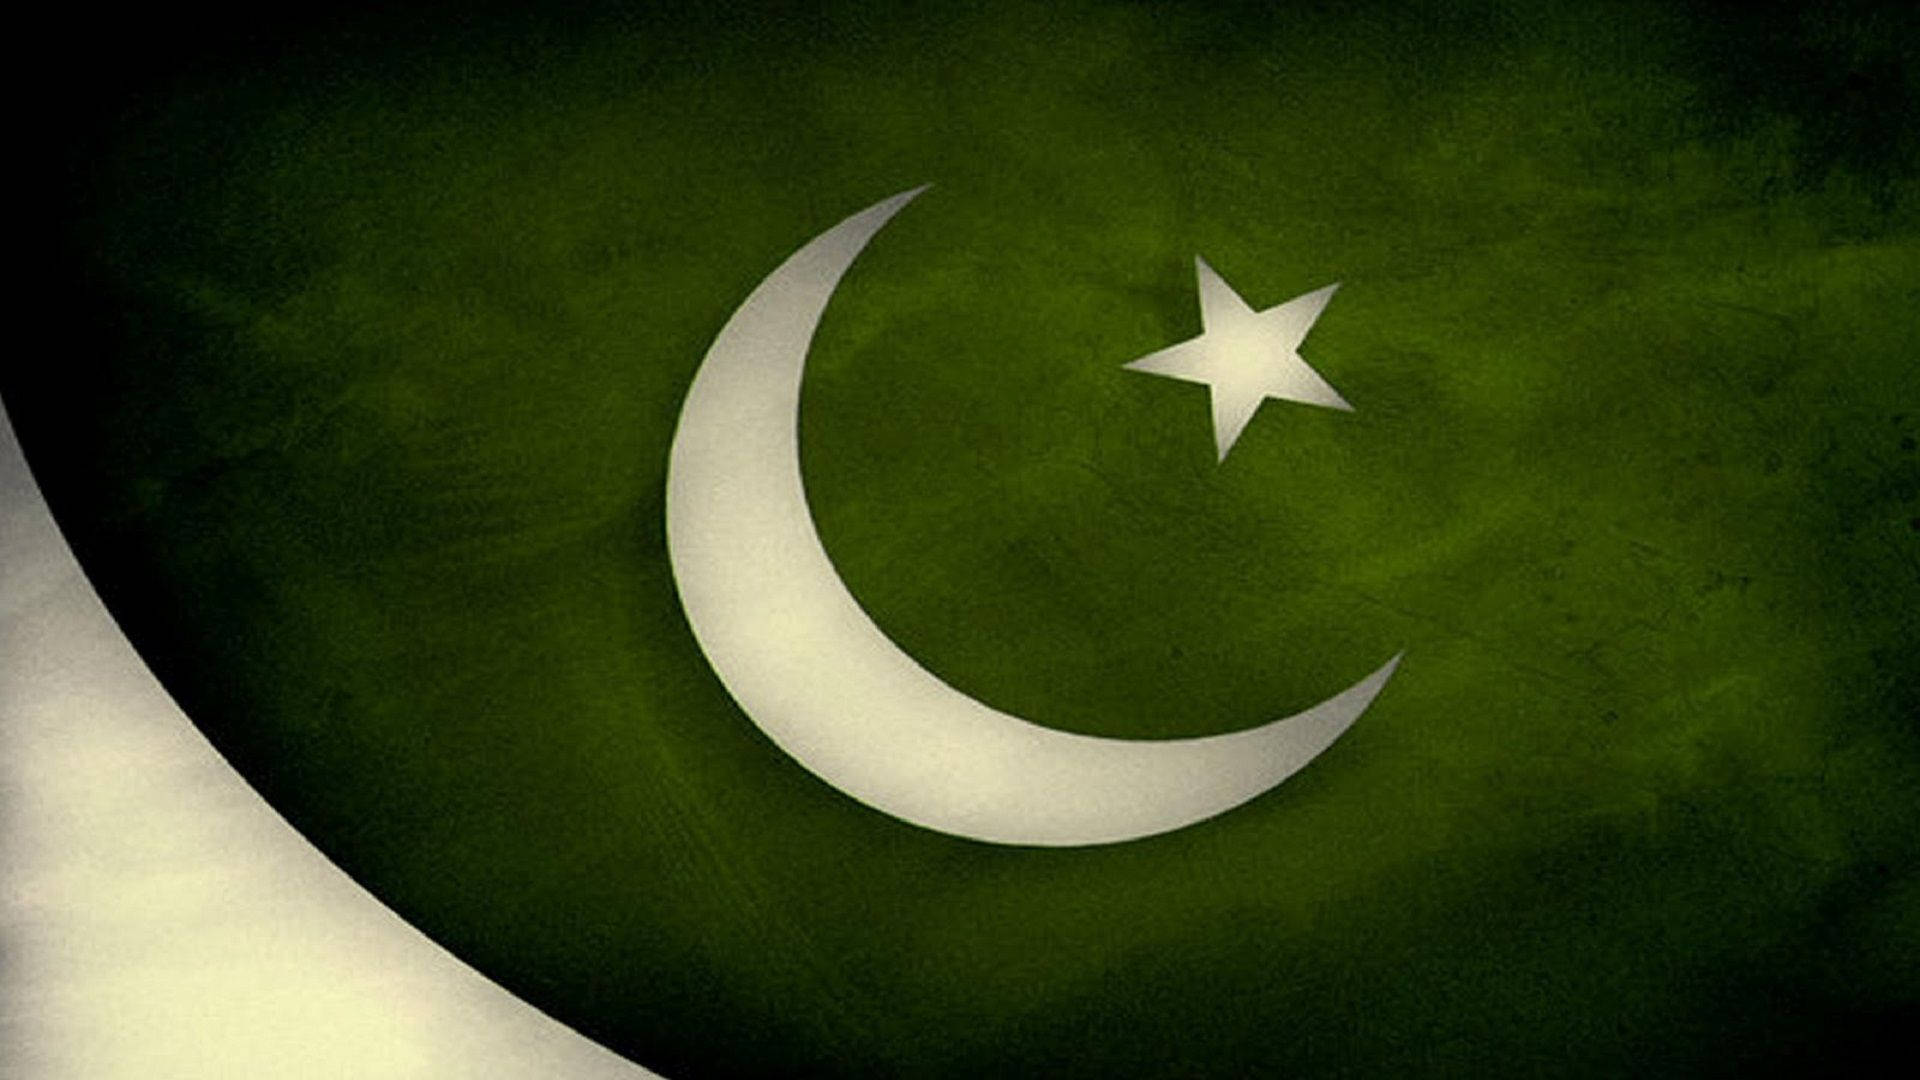 Banderade Pakistán En Color Verde Oscuro. Fondo de pantalla